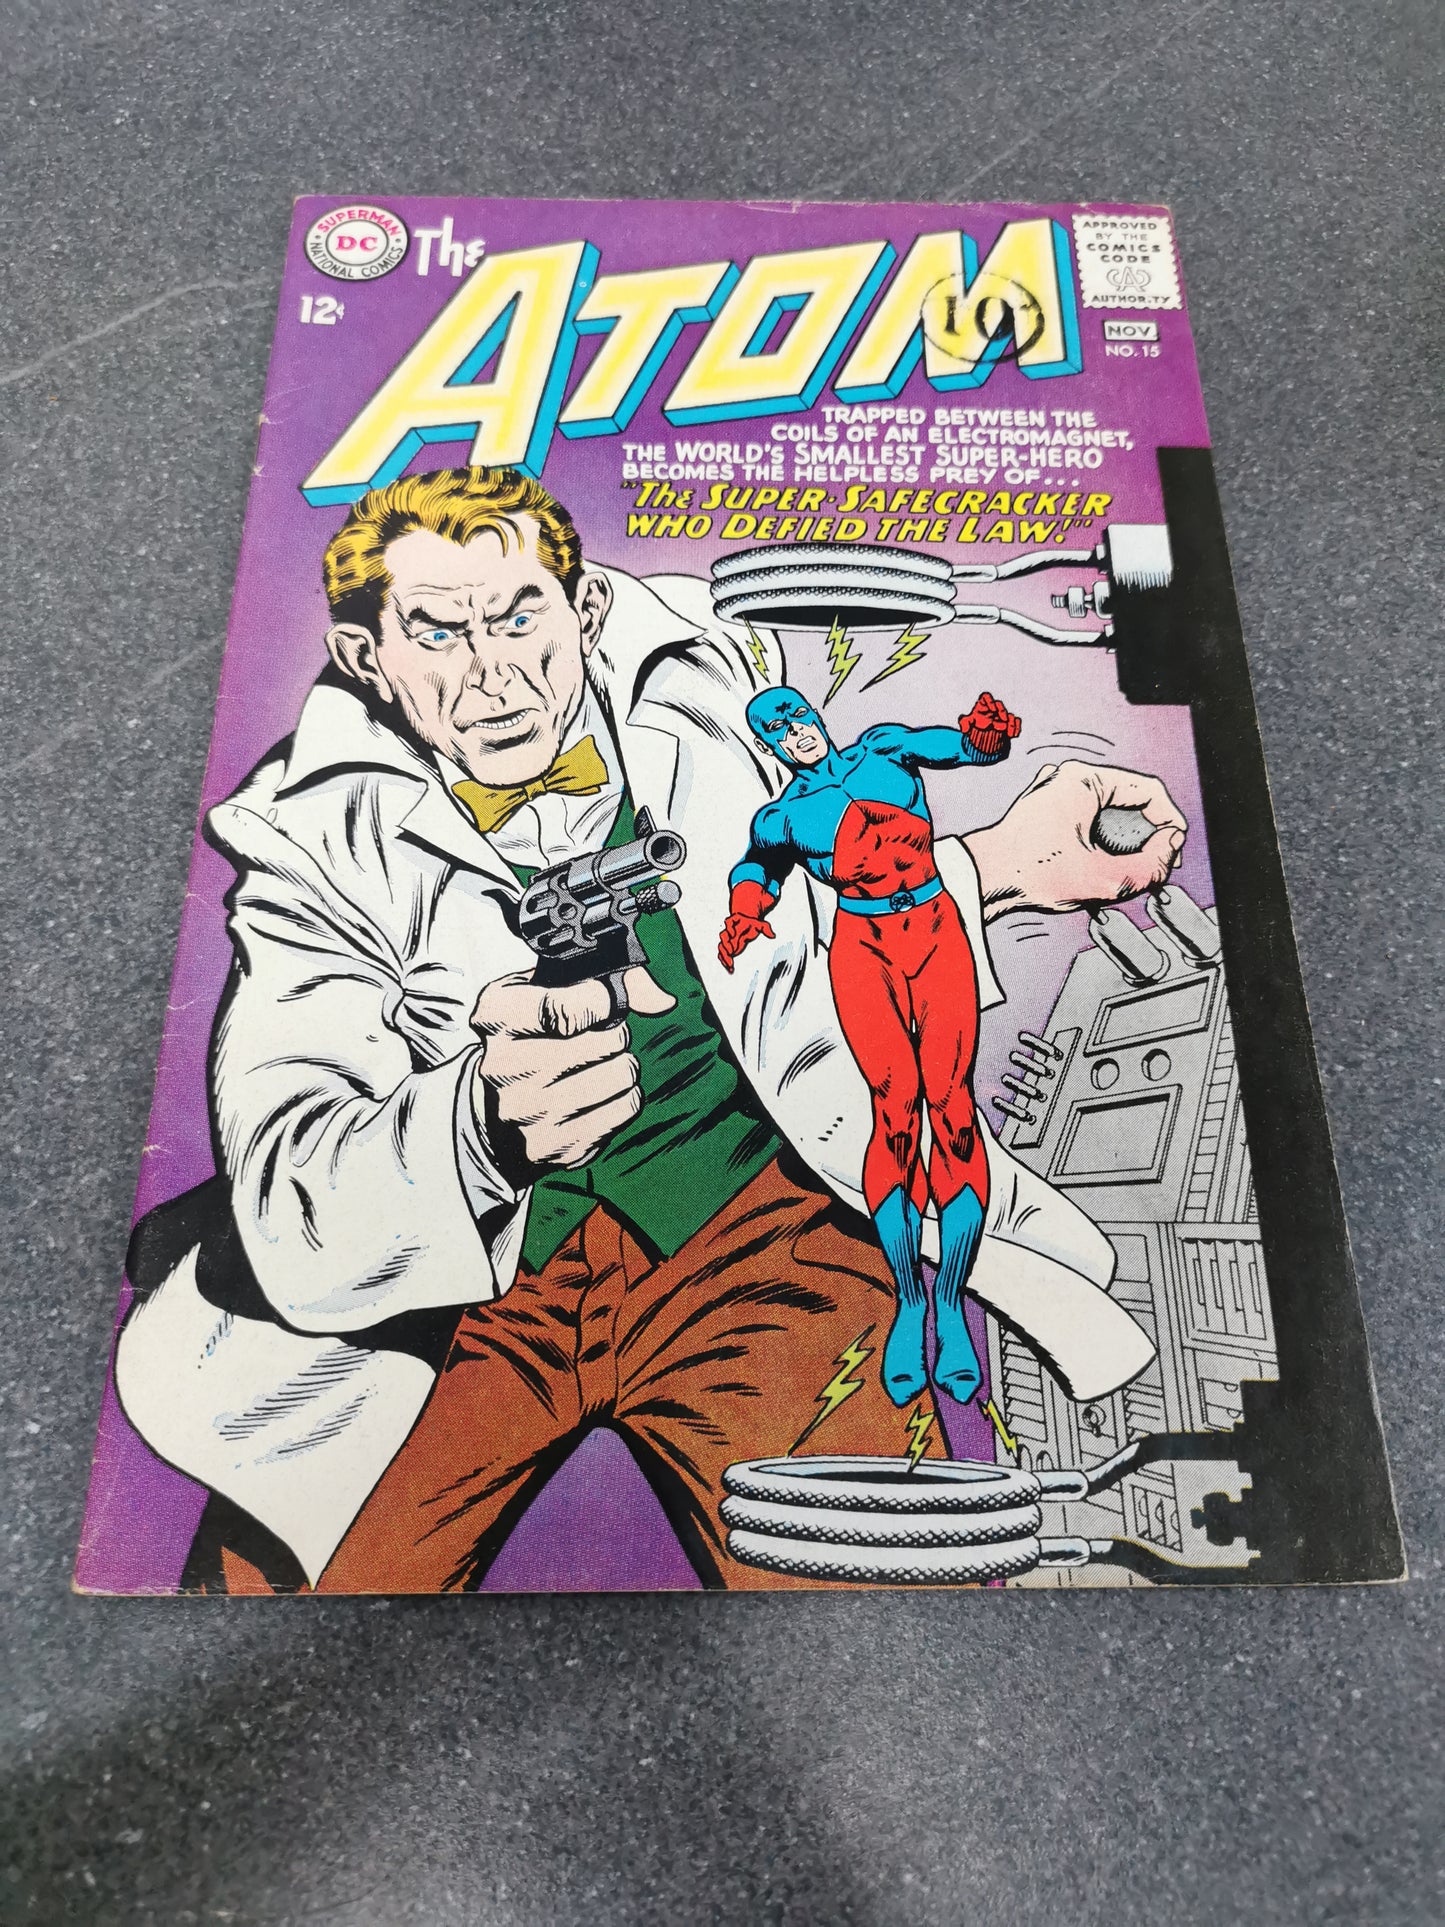 The Atom #15 1964 DC comic